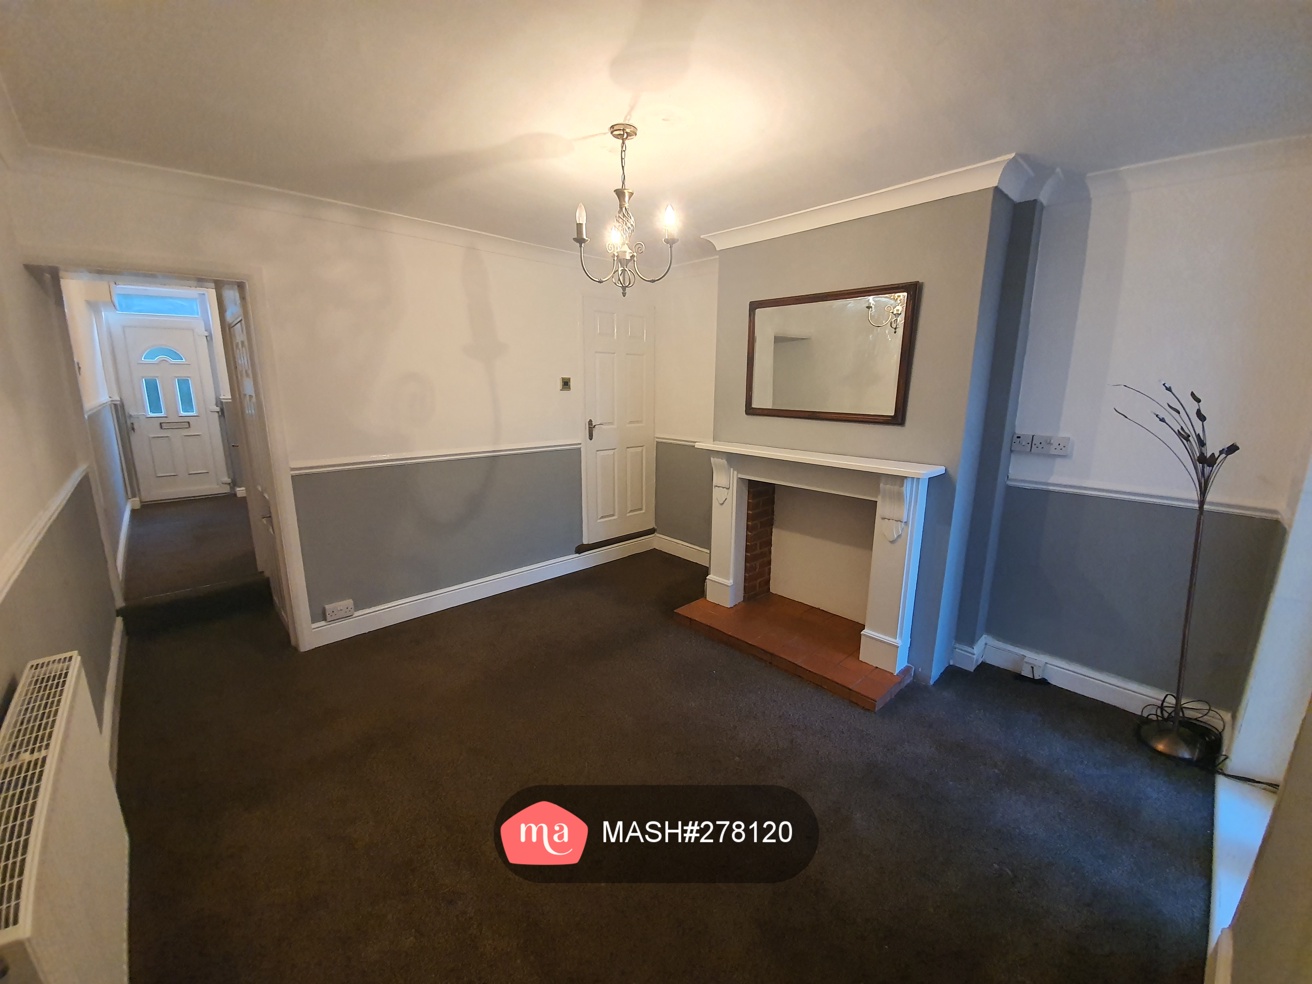 3 Bedroom Terraced to rent in Mansfield - Mashroom